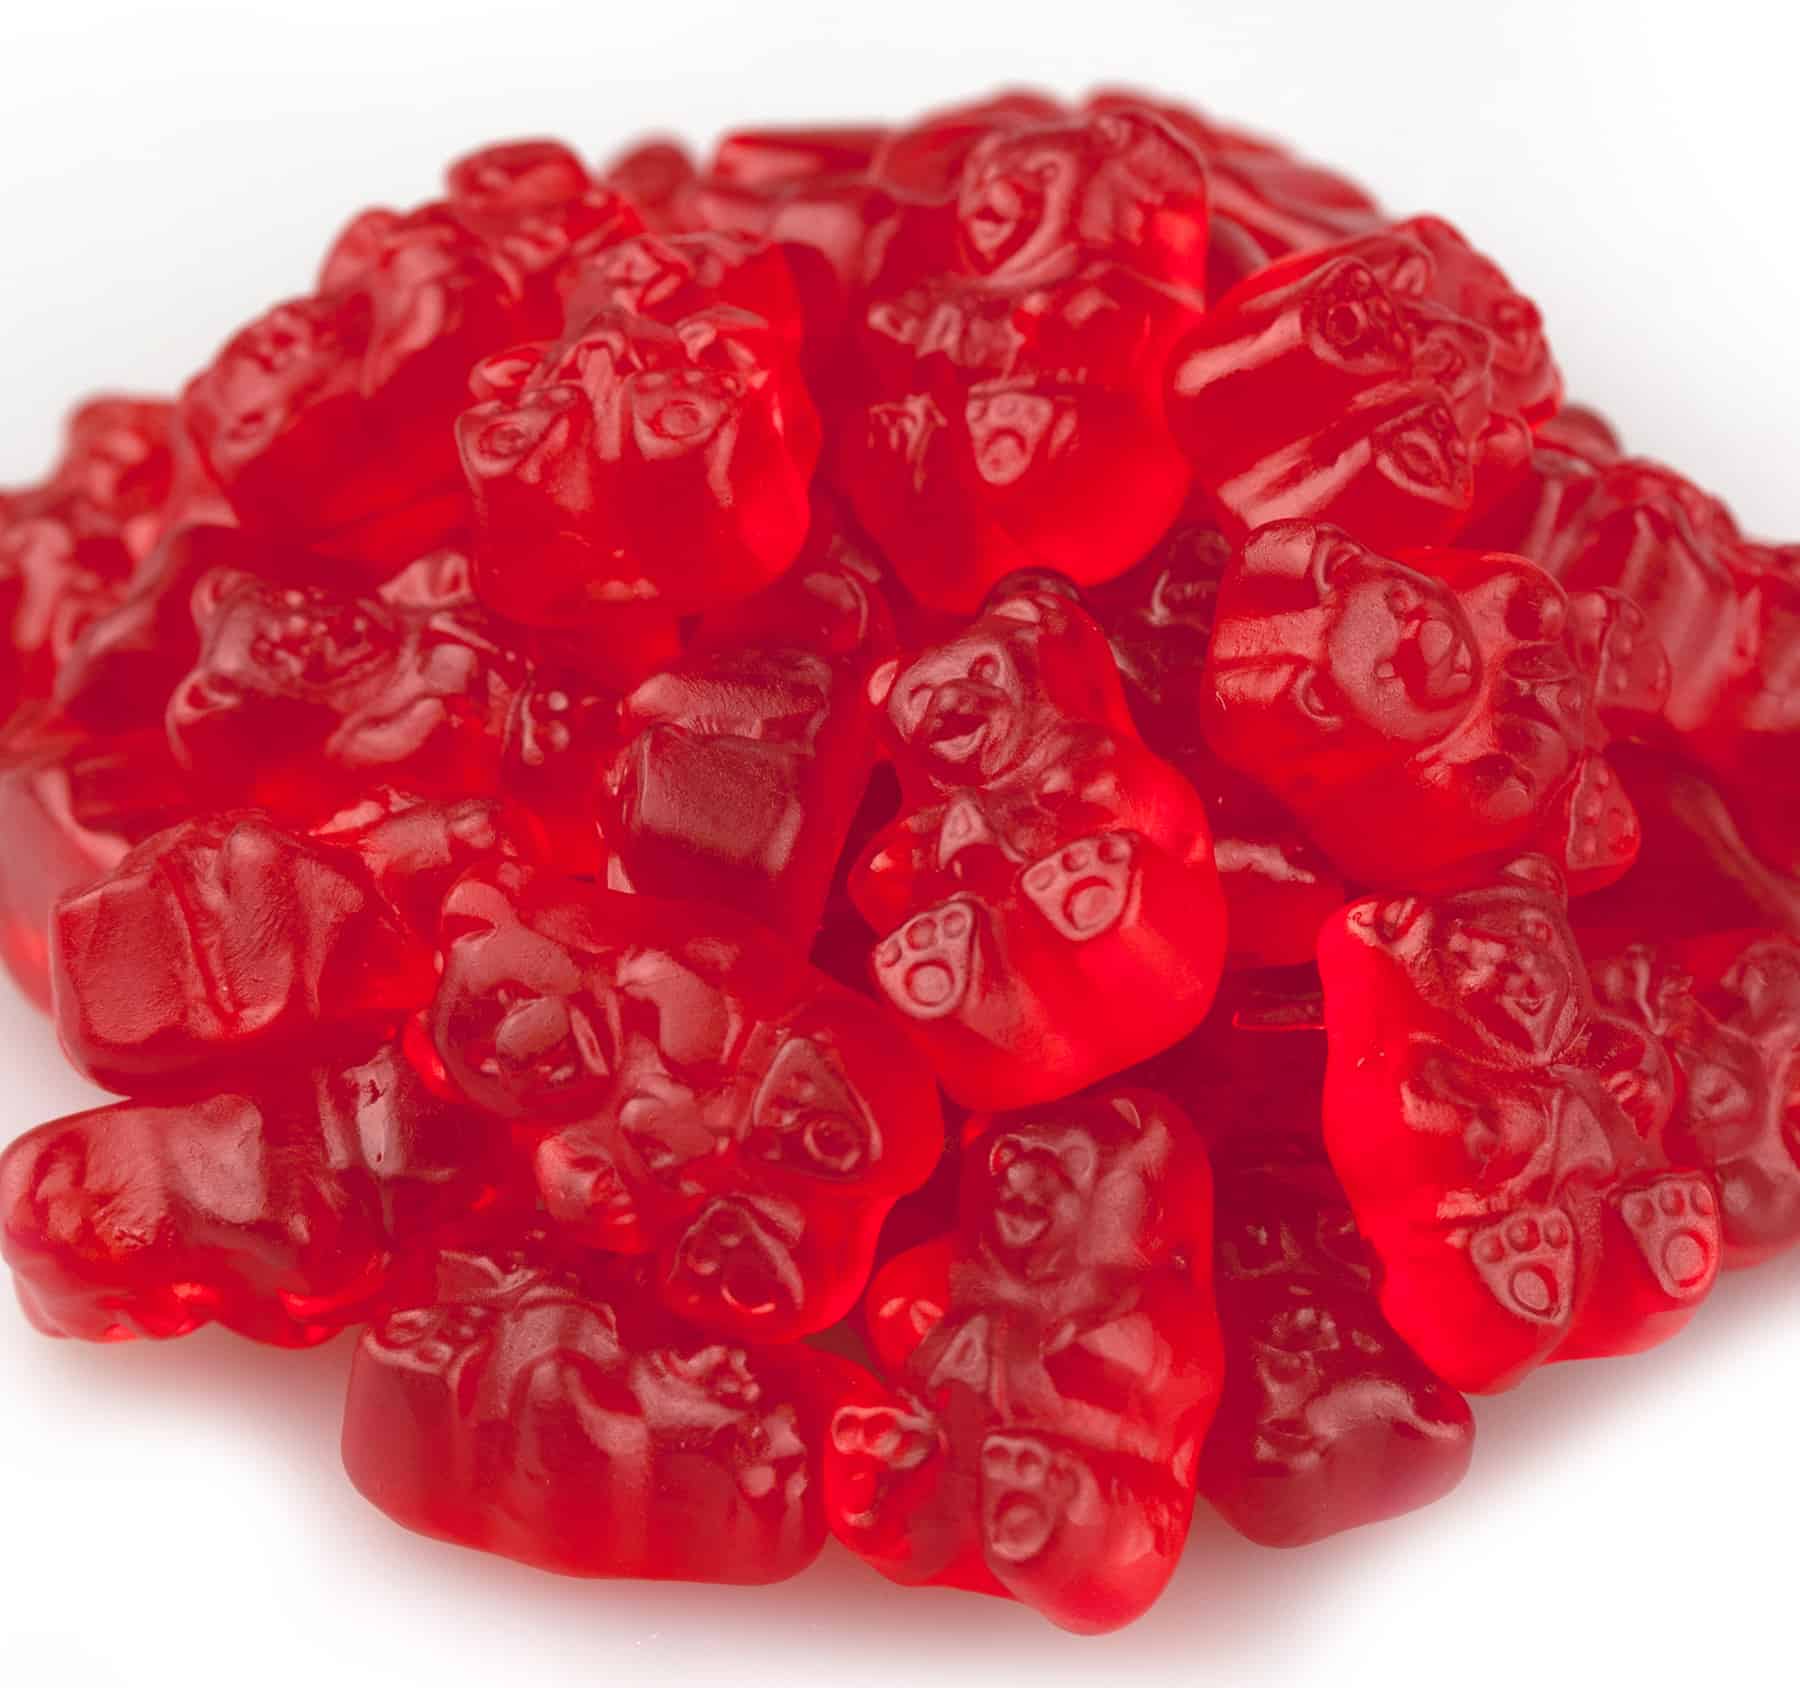 Cherry Gummy Bears